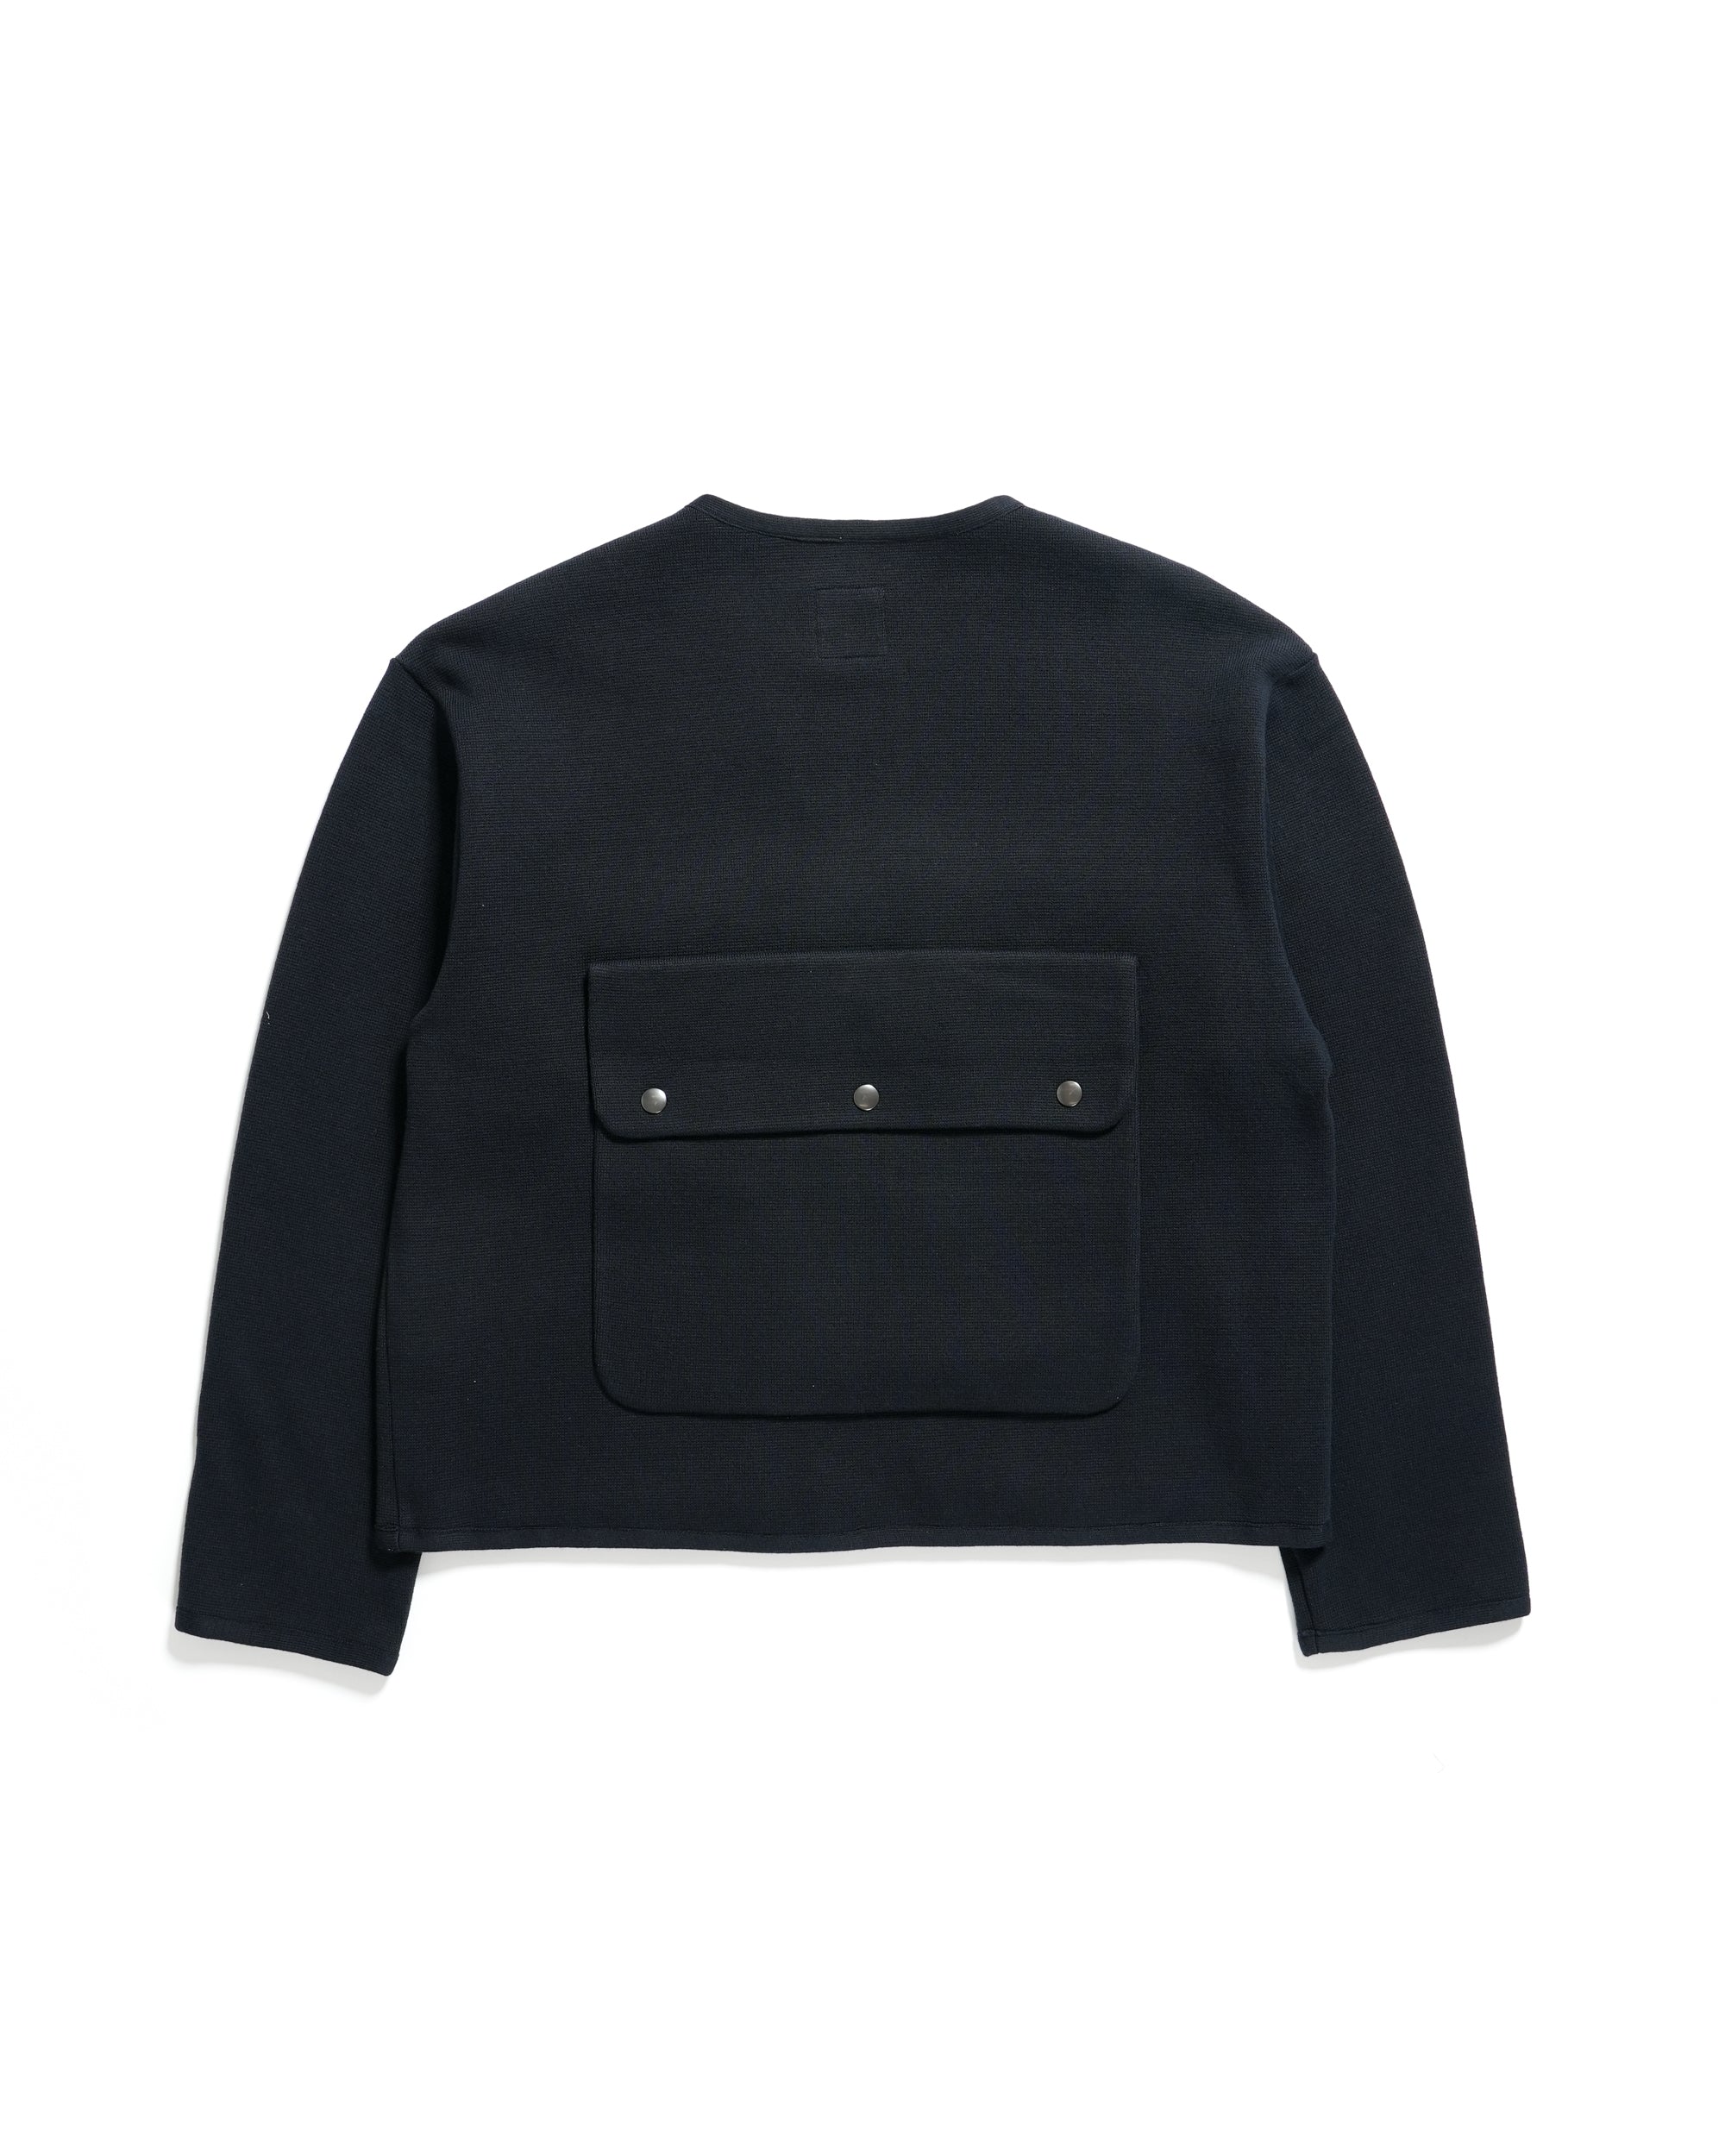 NNY x Arpenteur Utility Knit Jacket - Combed Cotton Milano - Dark Navy